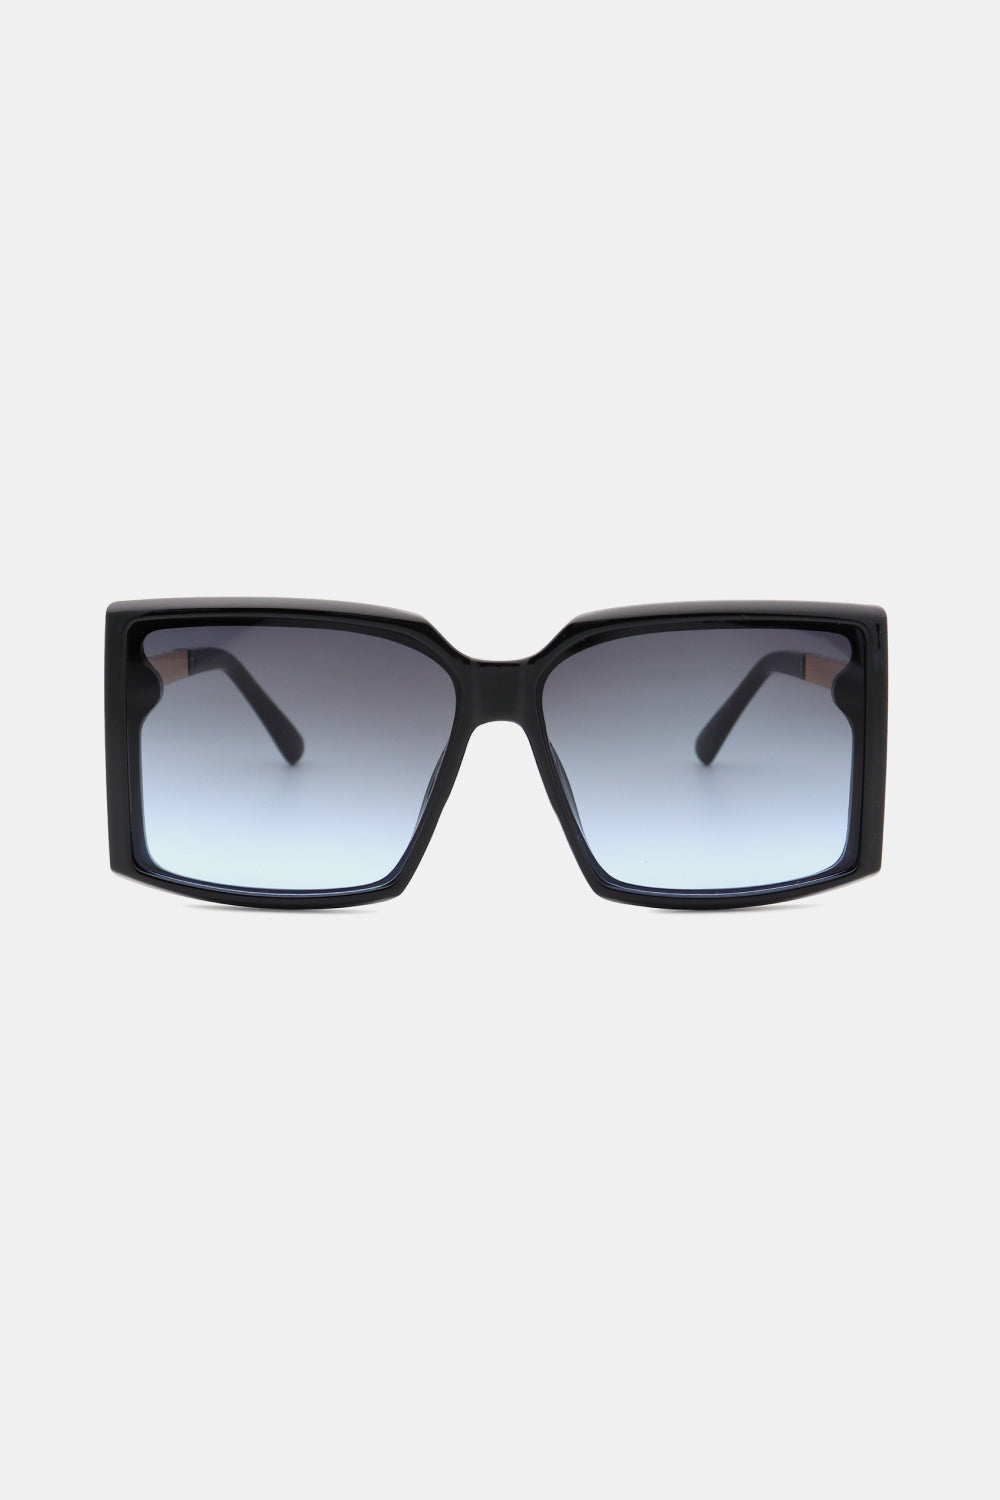 HANNAH MEA Polycarbonate Frame Square Sunglasses